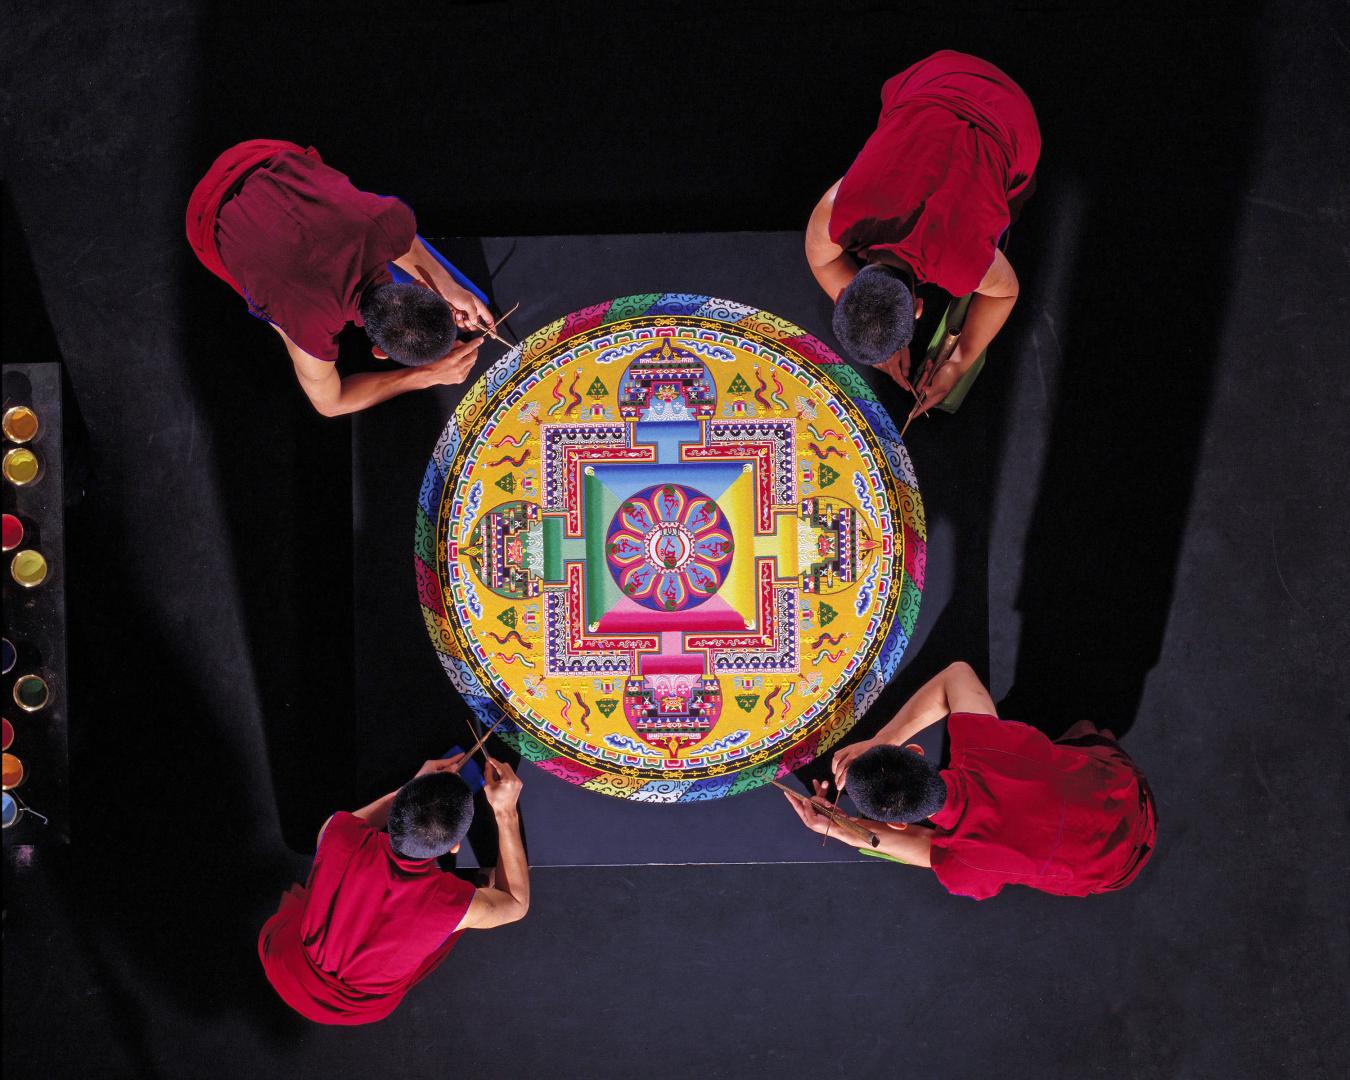 Tibetan Buddhist Monks constructing a Mandala Sand Painting shown